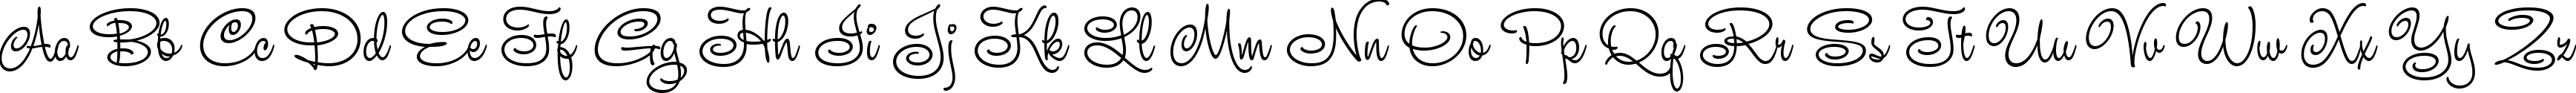 Пример написания английского алфавита шрифтом Teddy Bear